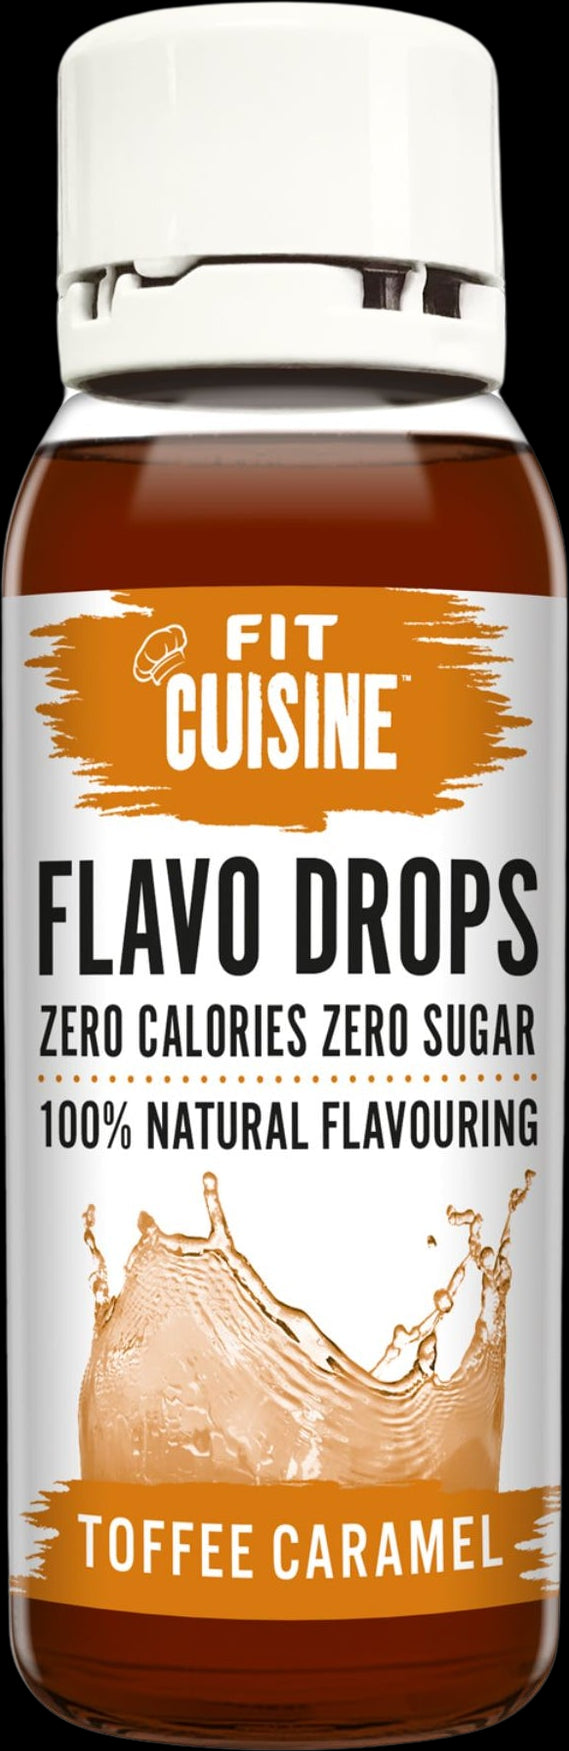 Fit Cusine Flavo Drops | Zero Calories - Zero Sugar - 100% Natural Flavoring - Тофи - Карамел